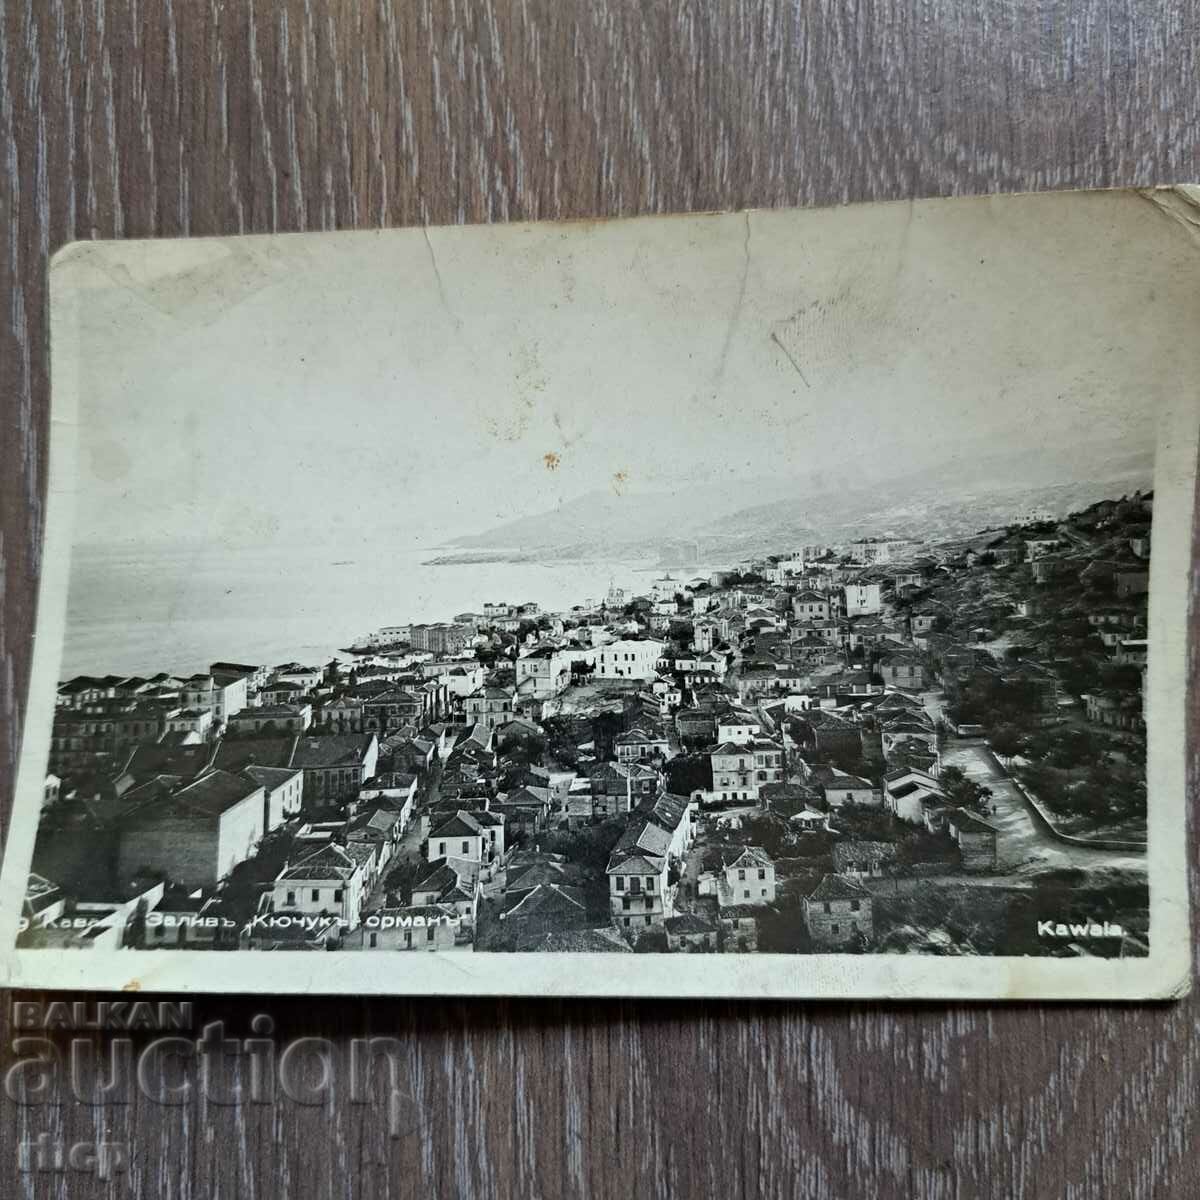 Kavala Kyuchuk Orman Paskov photo postcard Second World War